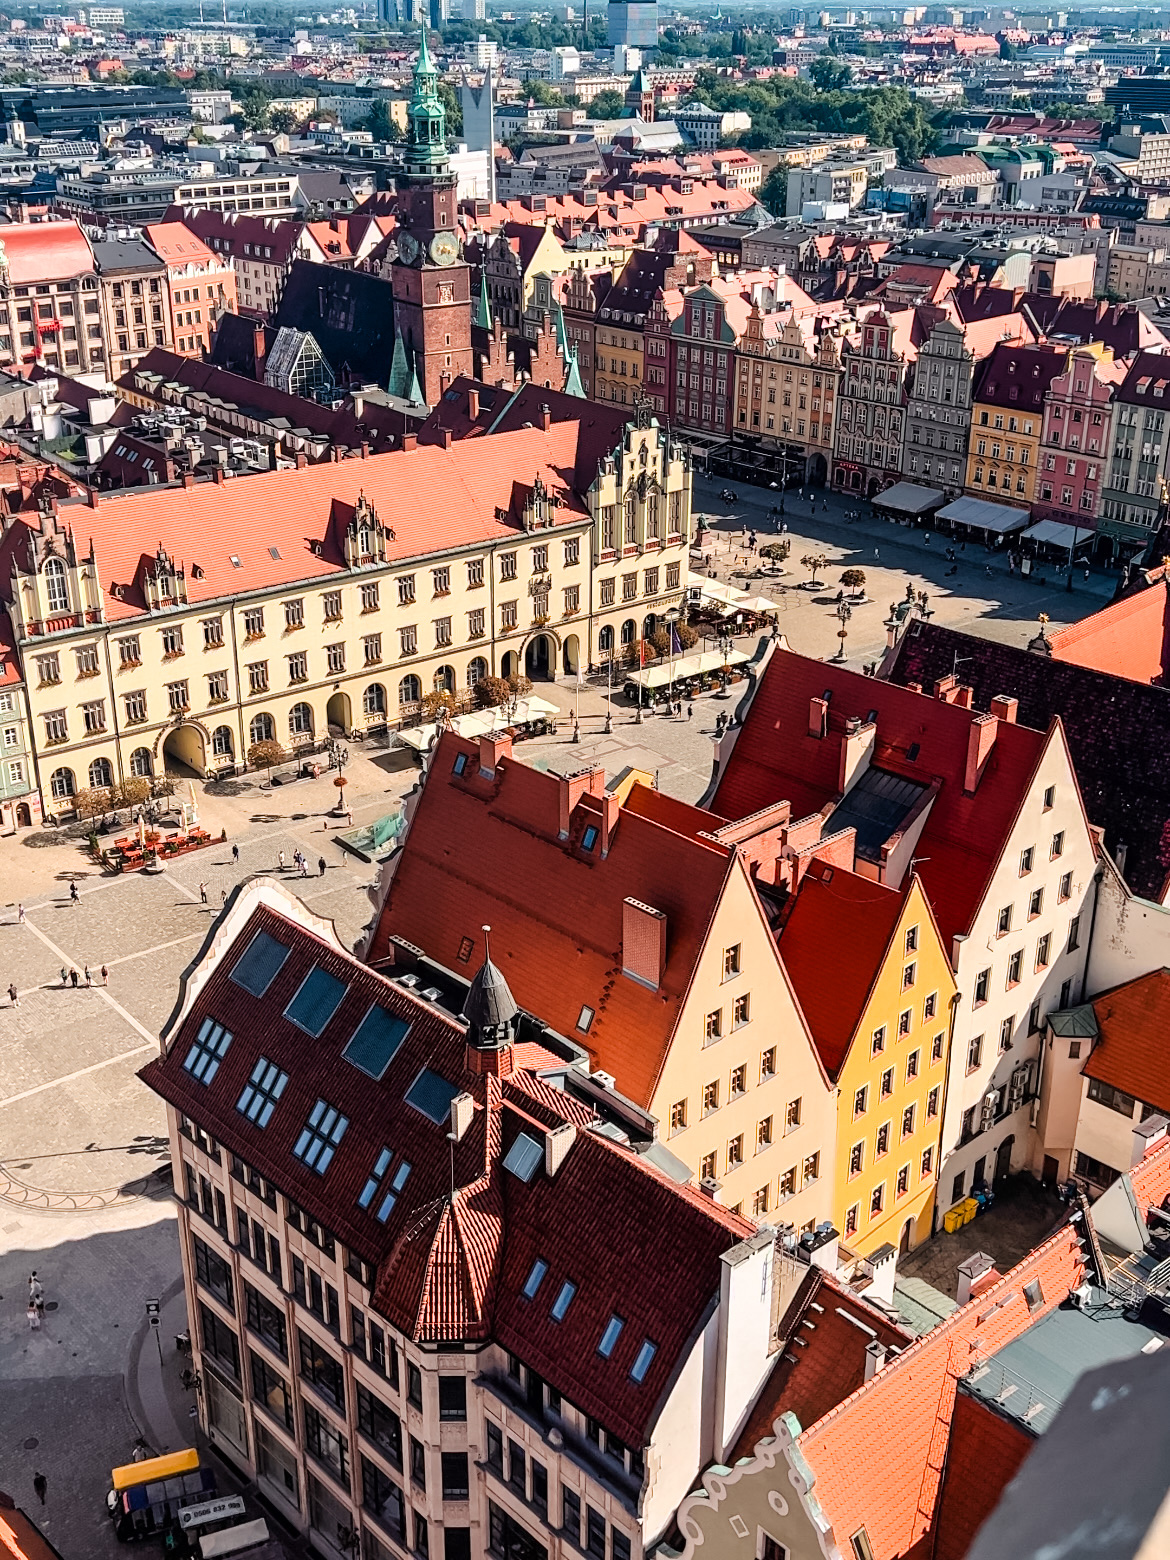 Wroclaw, a fairytale destination in Europe